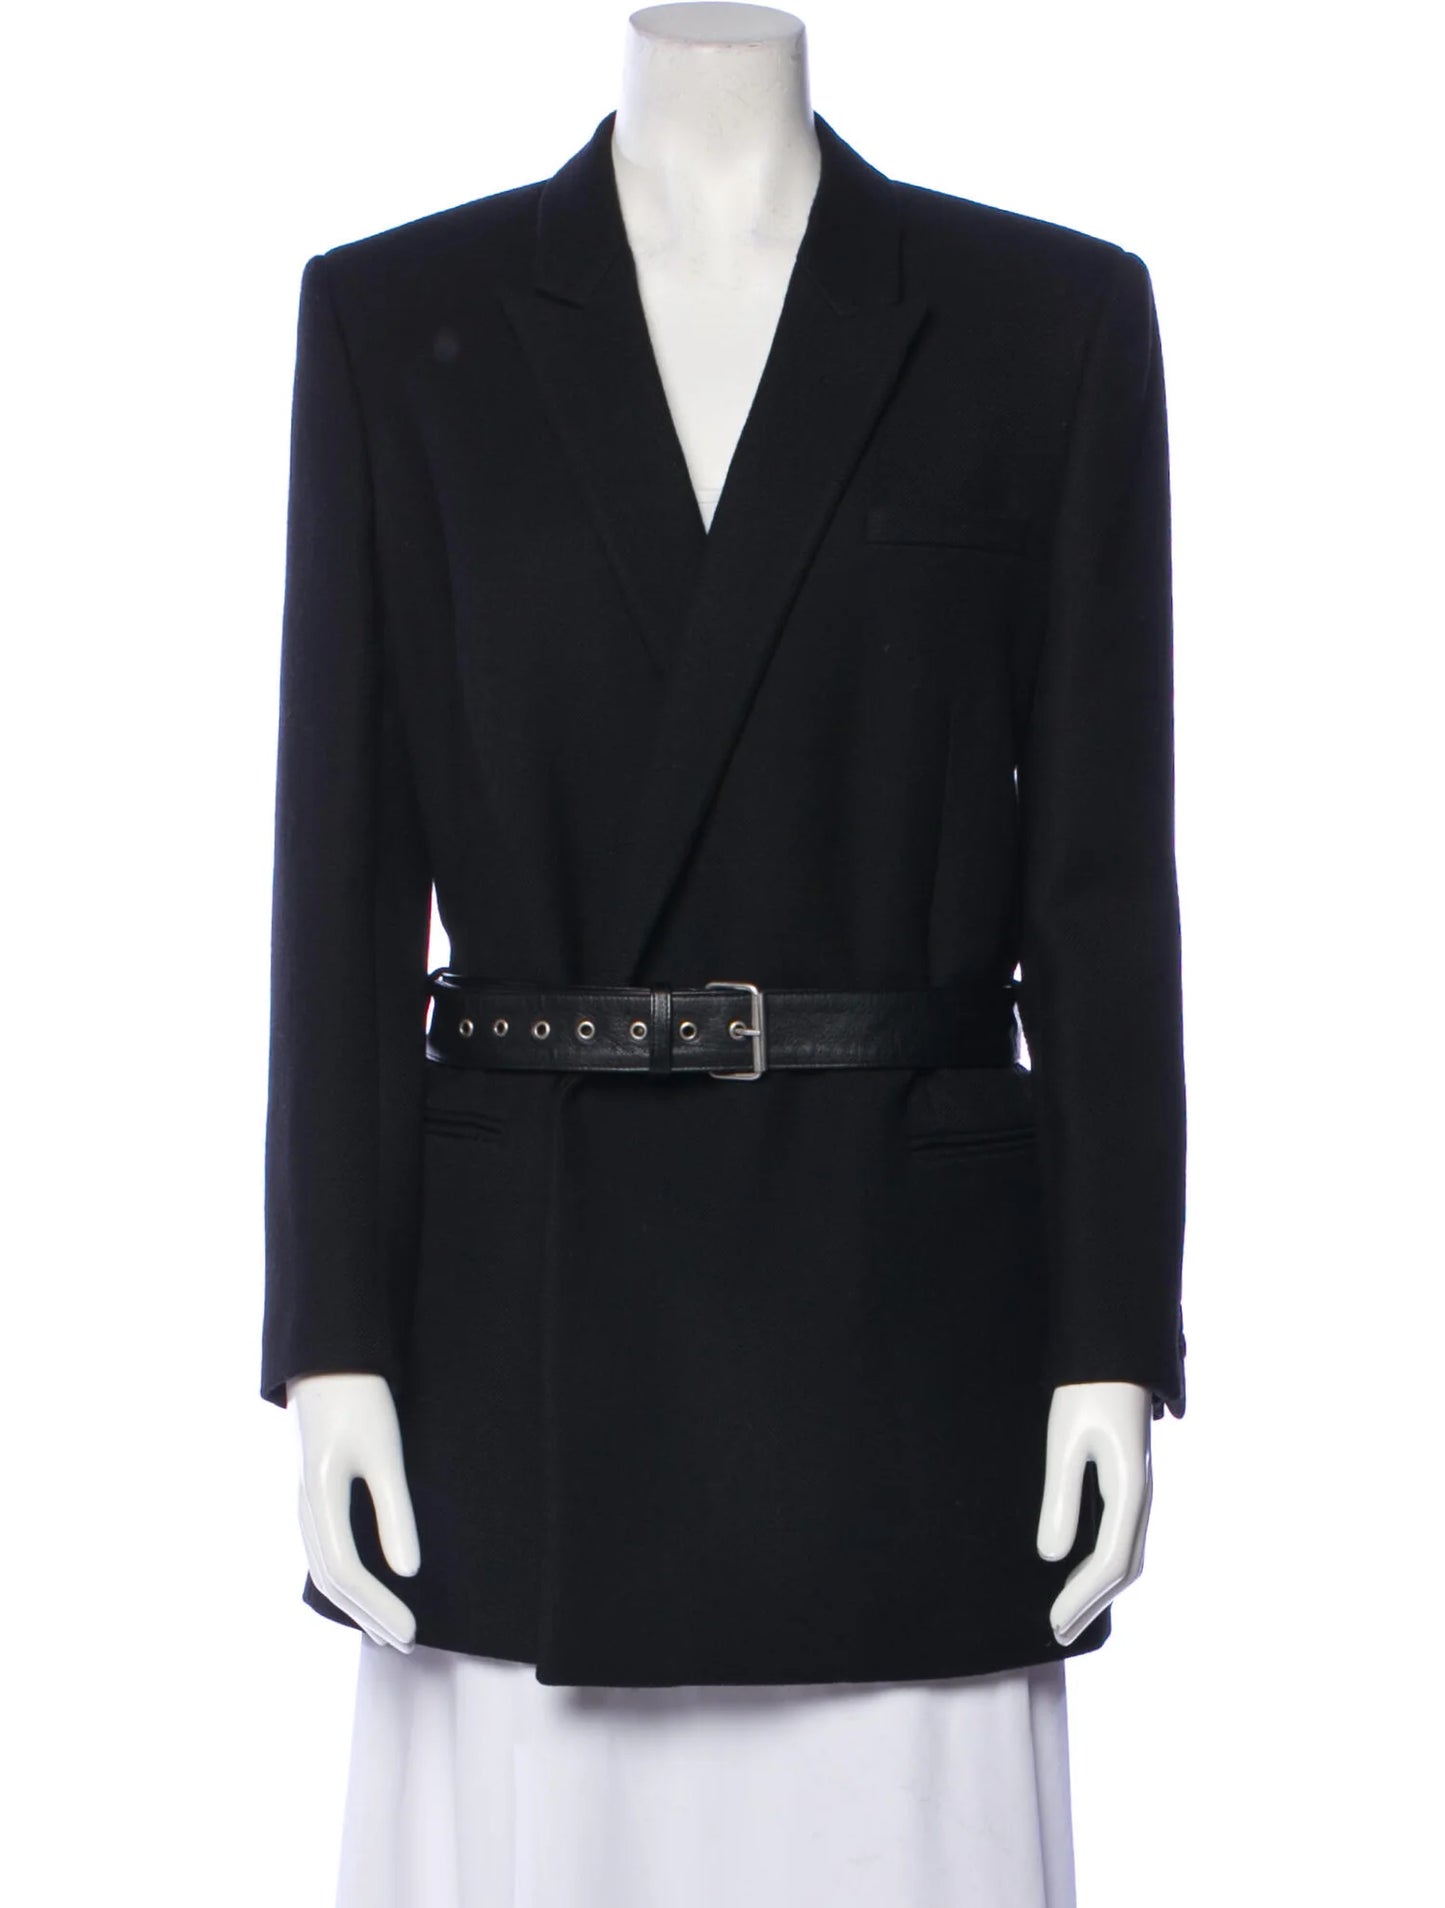 Black Blazer Coat with Leather Belt - L